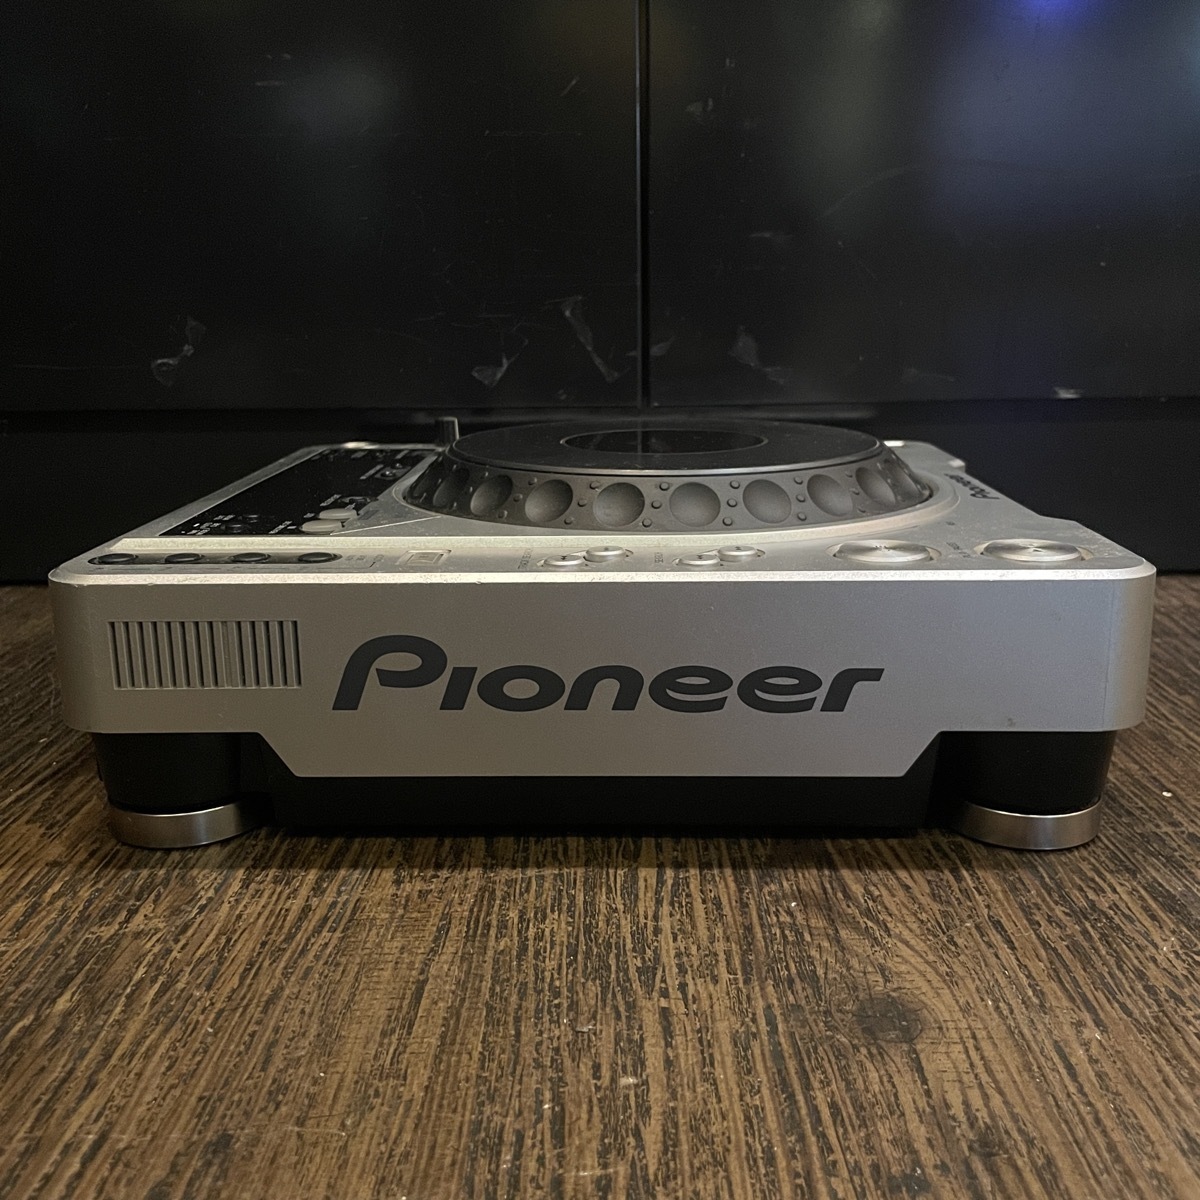 Pioneer CDJ-800 MK2 CDJ Pioneer DJ machinery -GrunSound-z248-